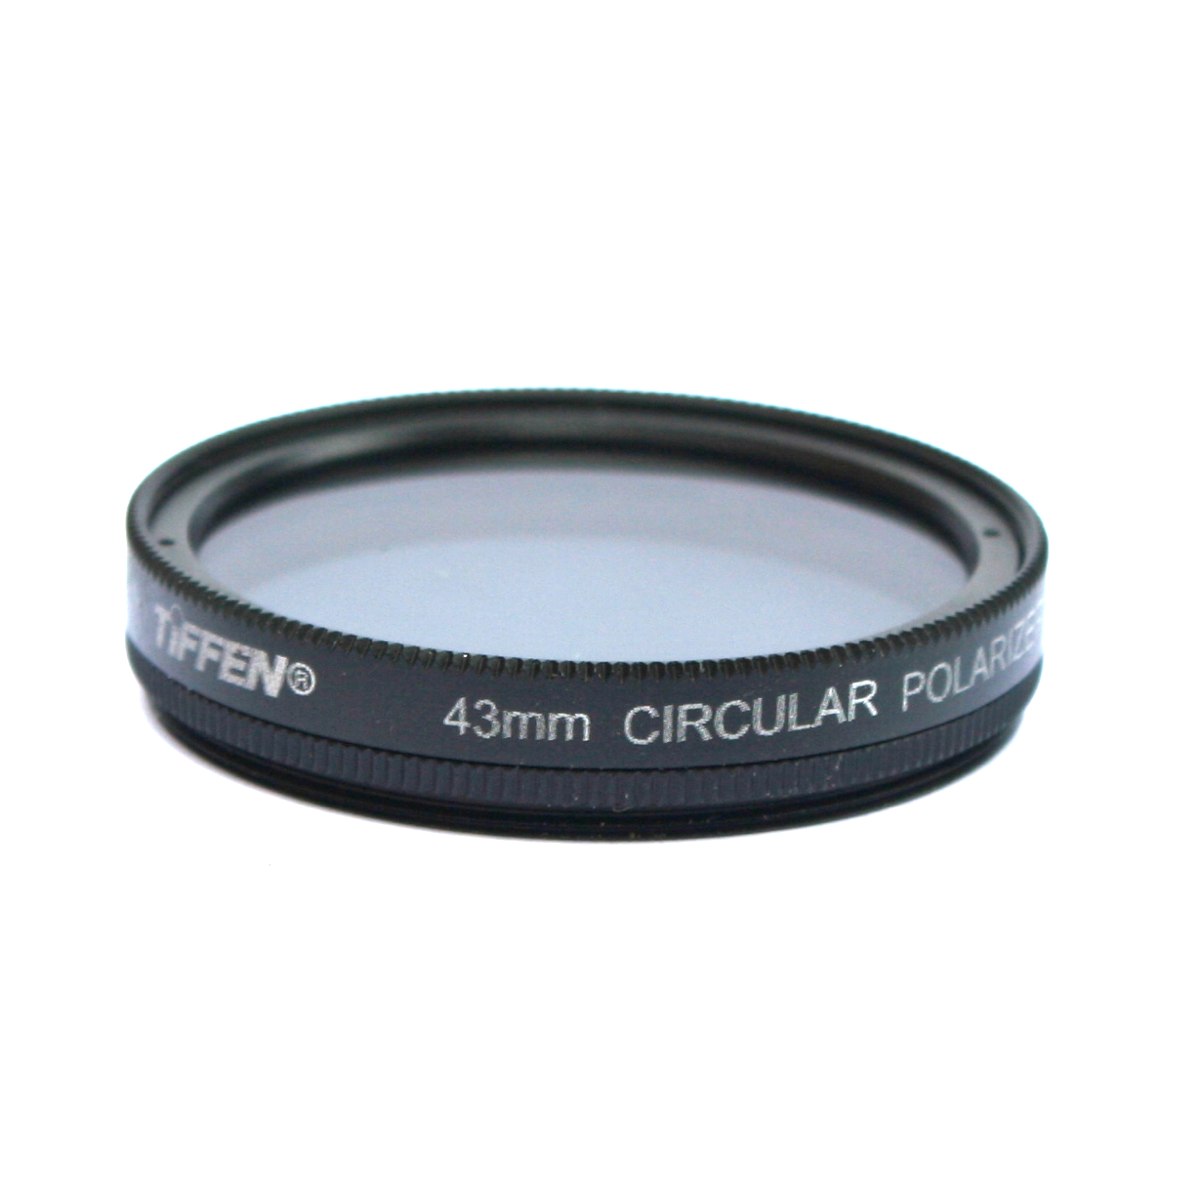 Tiffen 43mm Circular Polarizer Filter